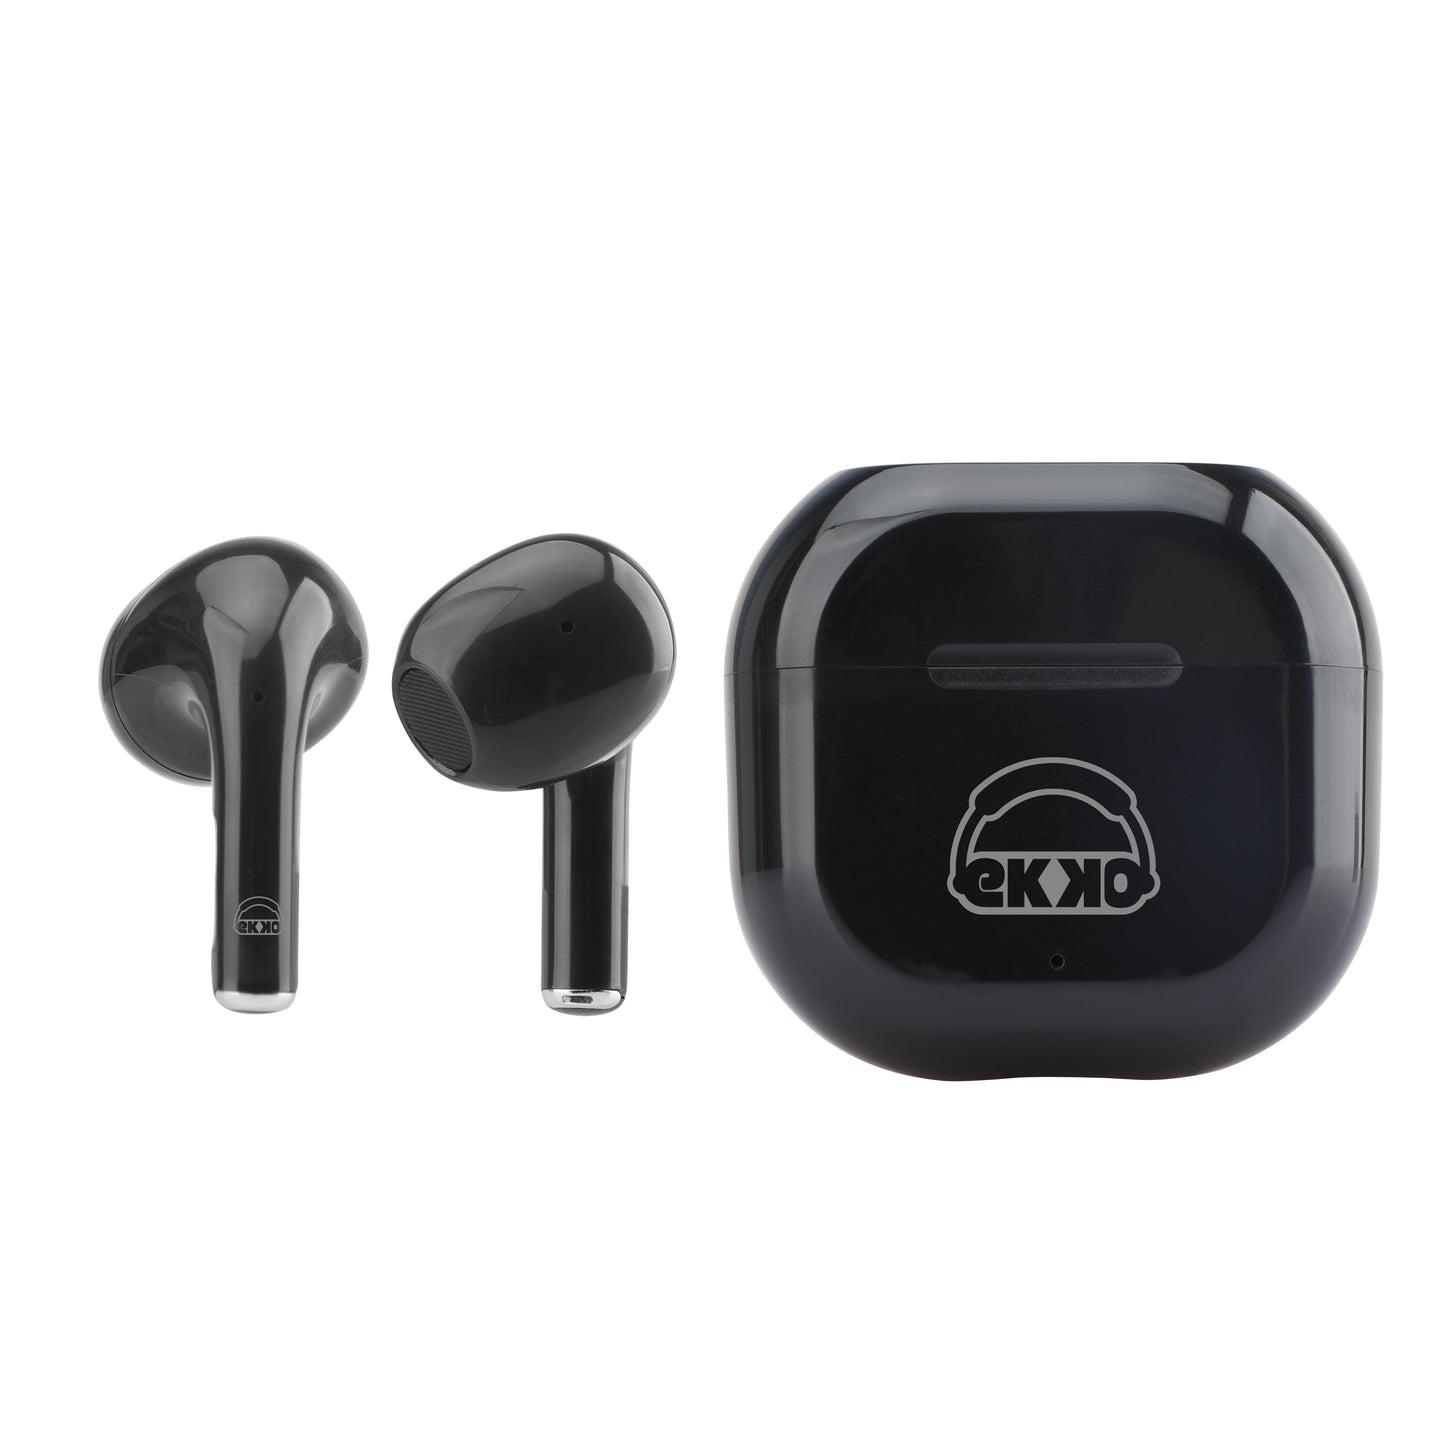 EKKO Earbeats T02 True Wireless Earbuds: 10MM Drivers, Mass Bass, Bluetooth 5.0, Ultimate Comfort, 3-Hour Playback